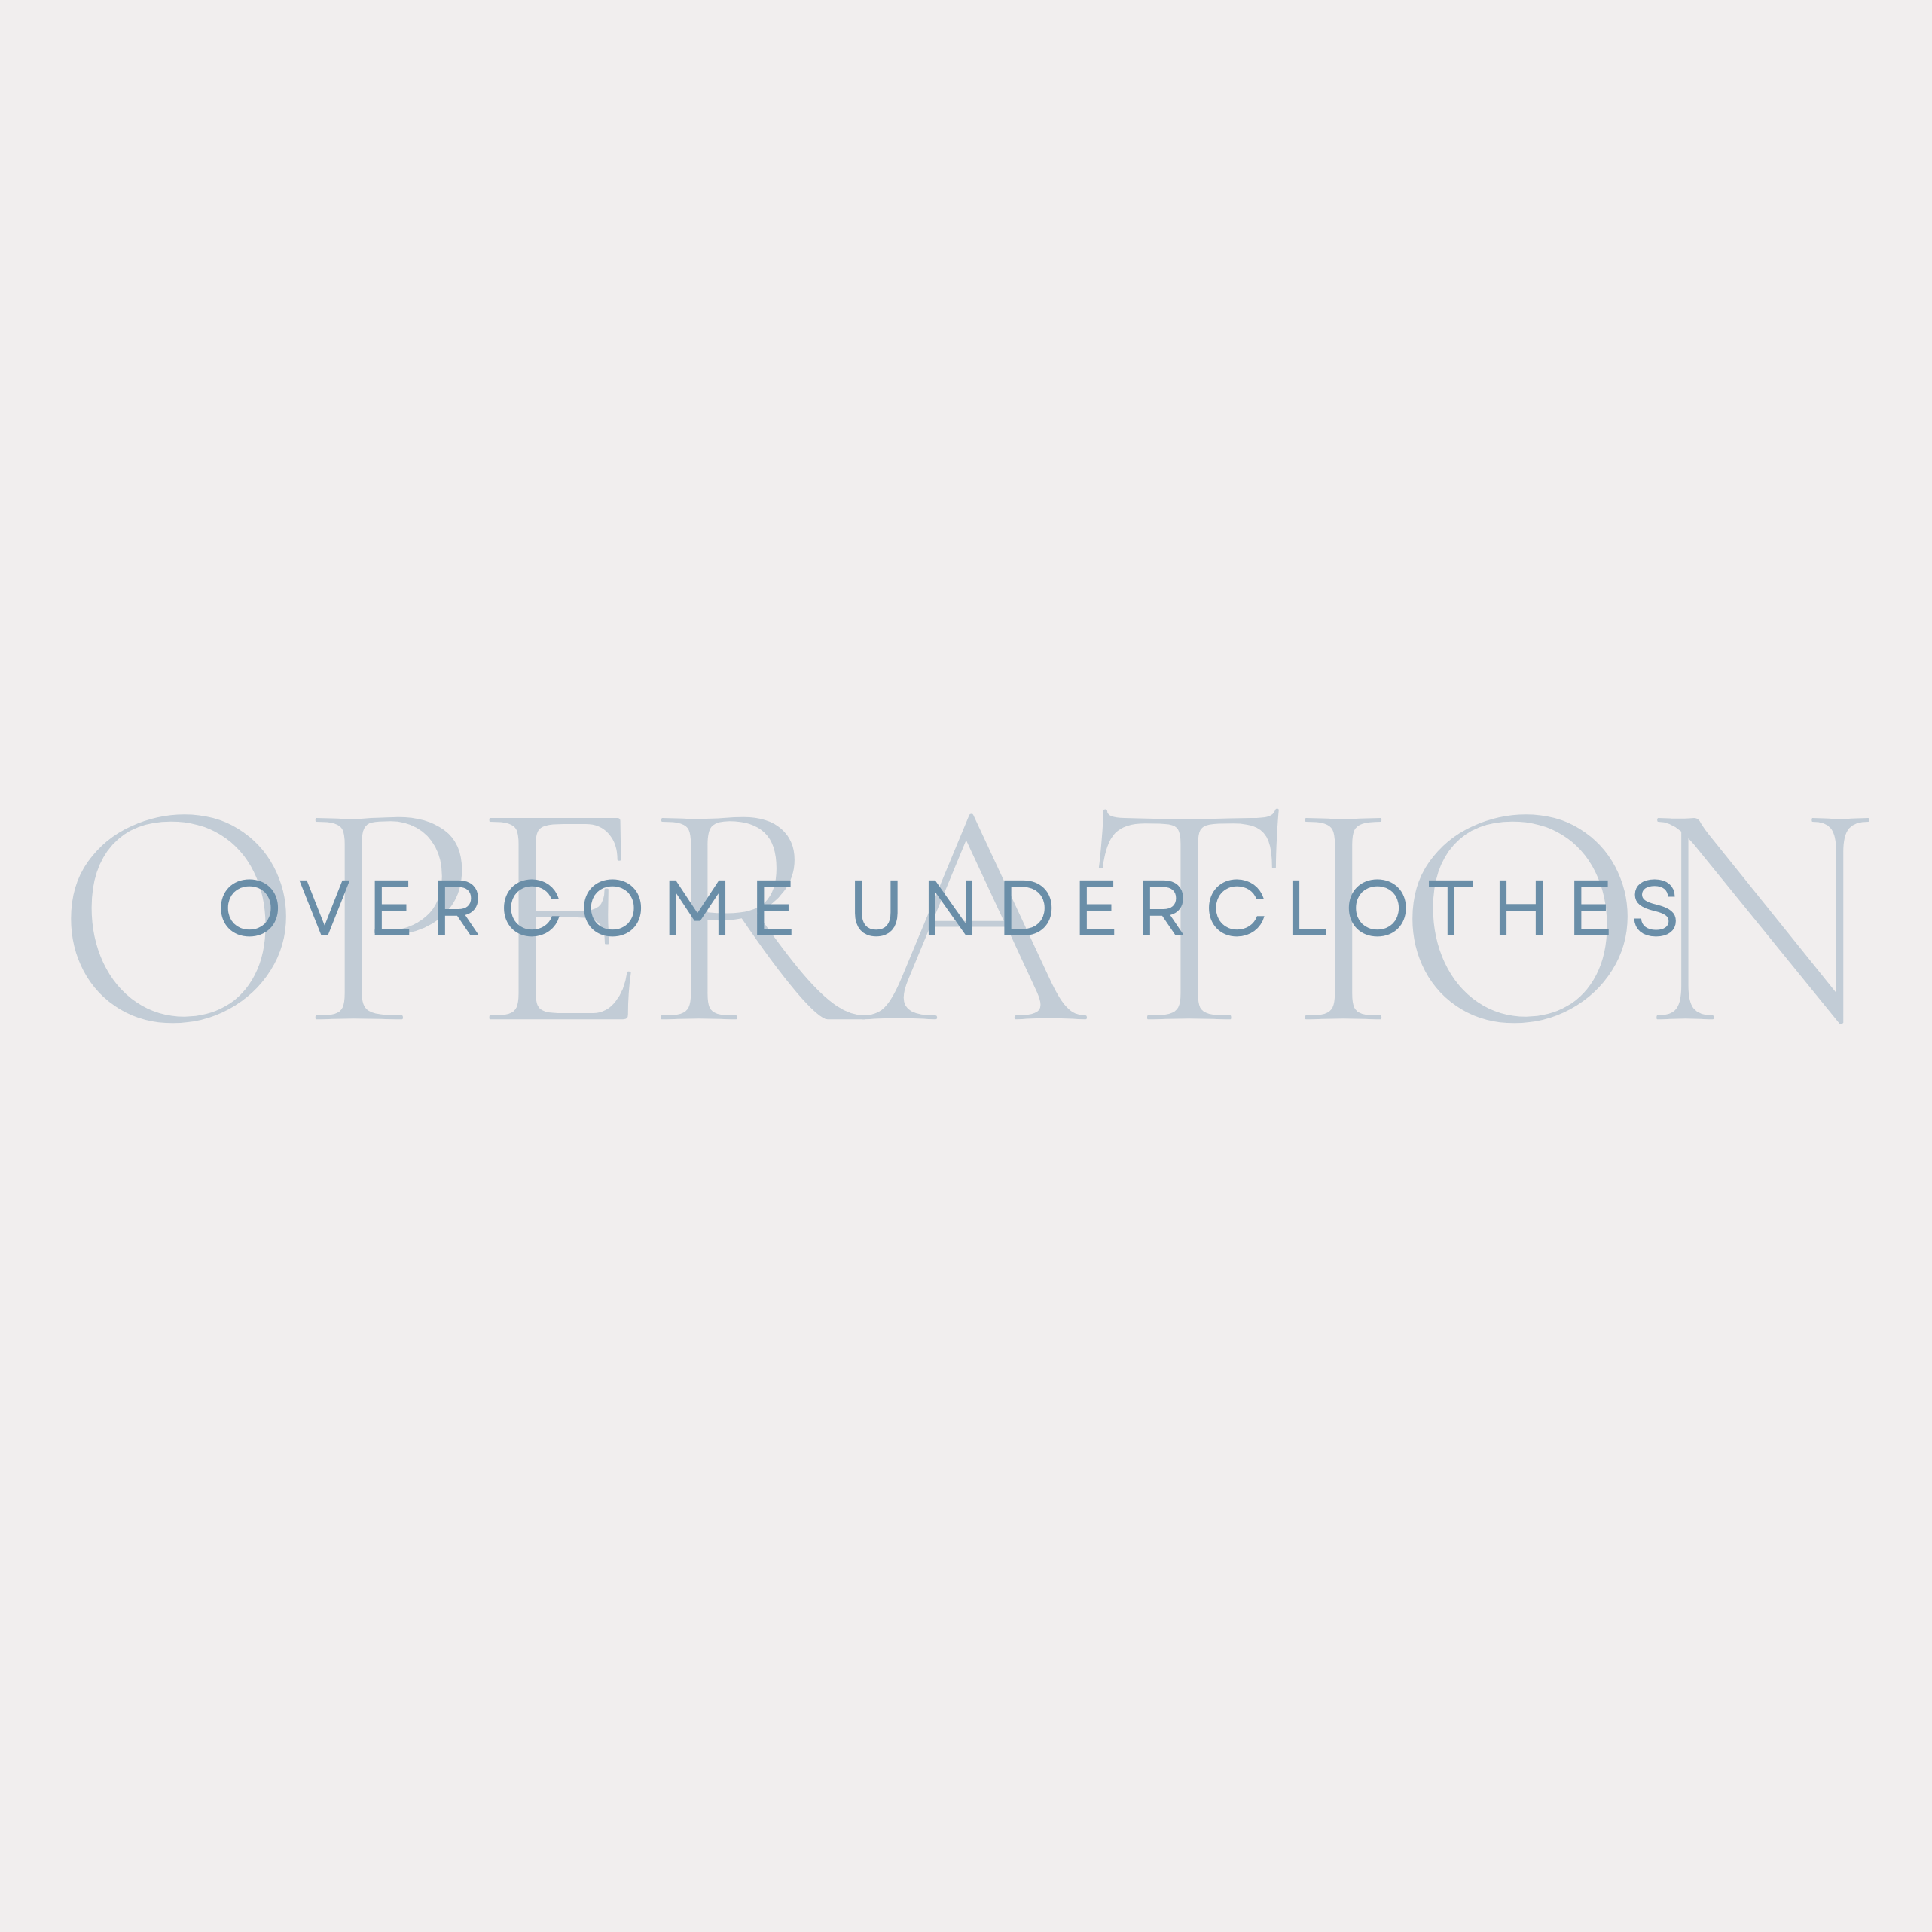 Overcome Underclothes